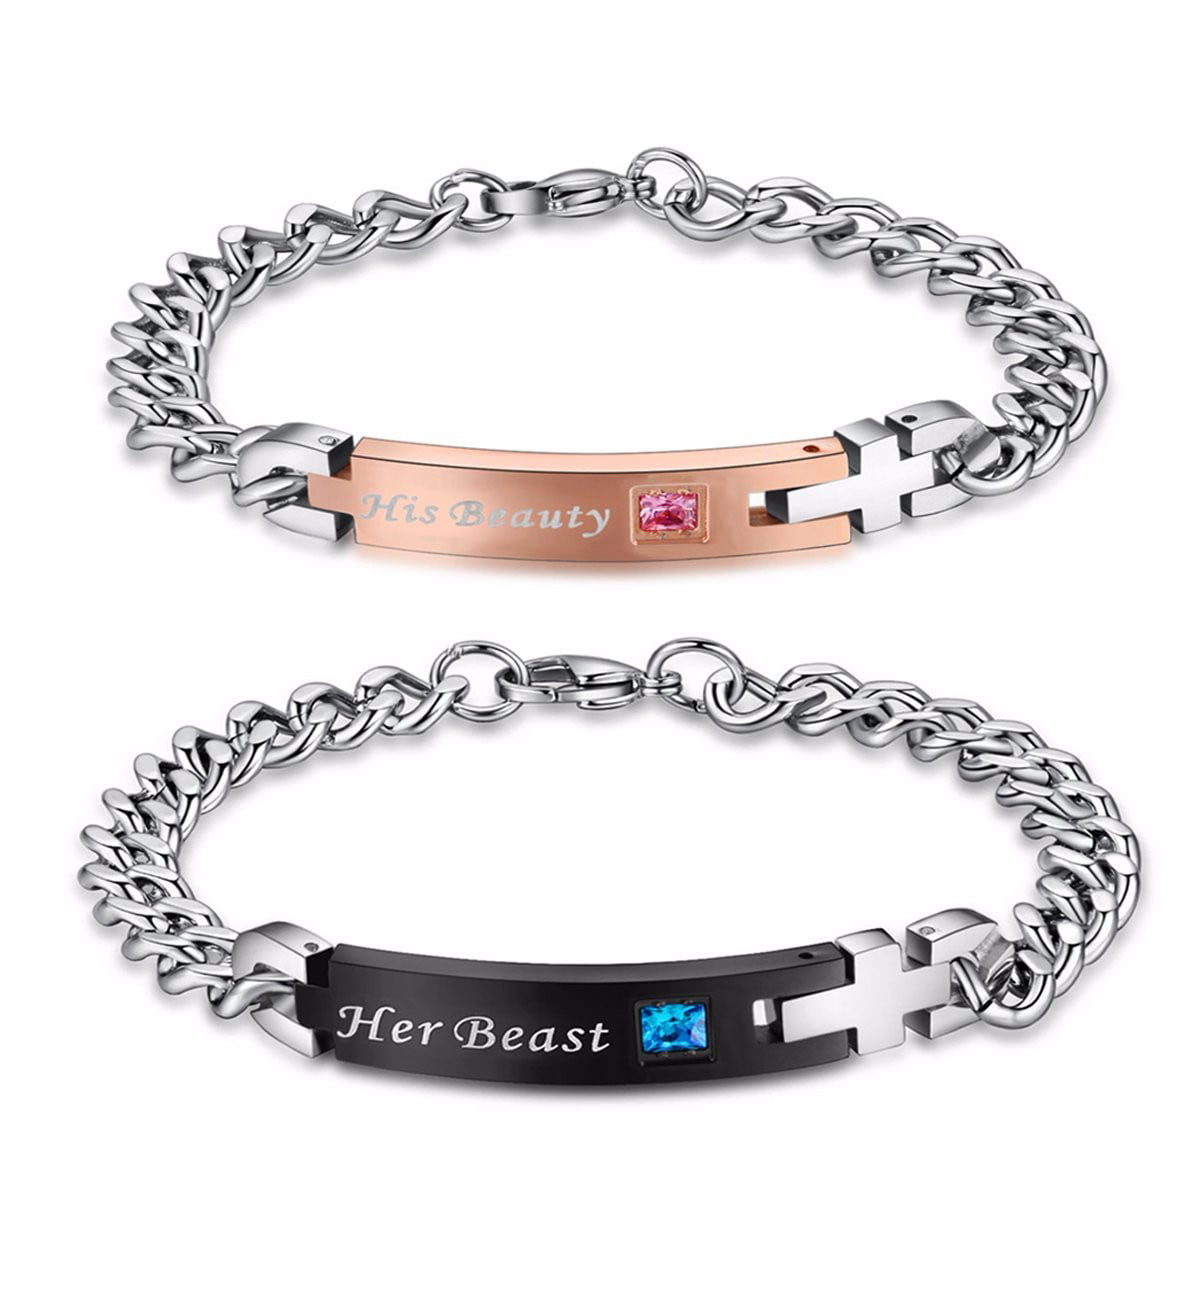 Willstar Couple Bracelets for 2 Matching Yin Yang Adjustable Cord Bracelet  for Bff Friendship Relationship Boyfriend Girlfriend Valentines Gift  Siver  Walmartcom